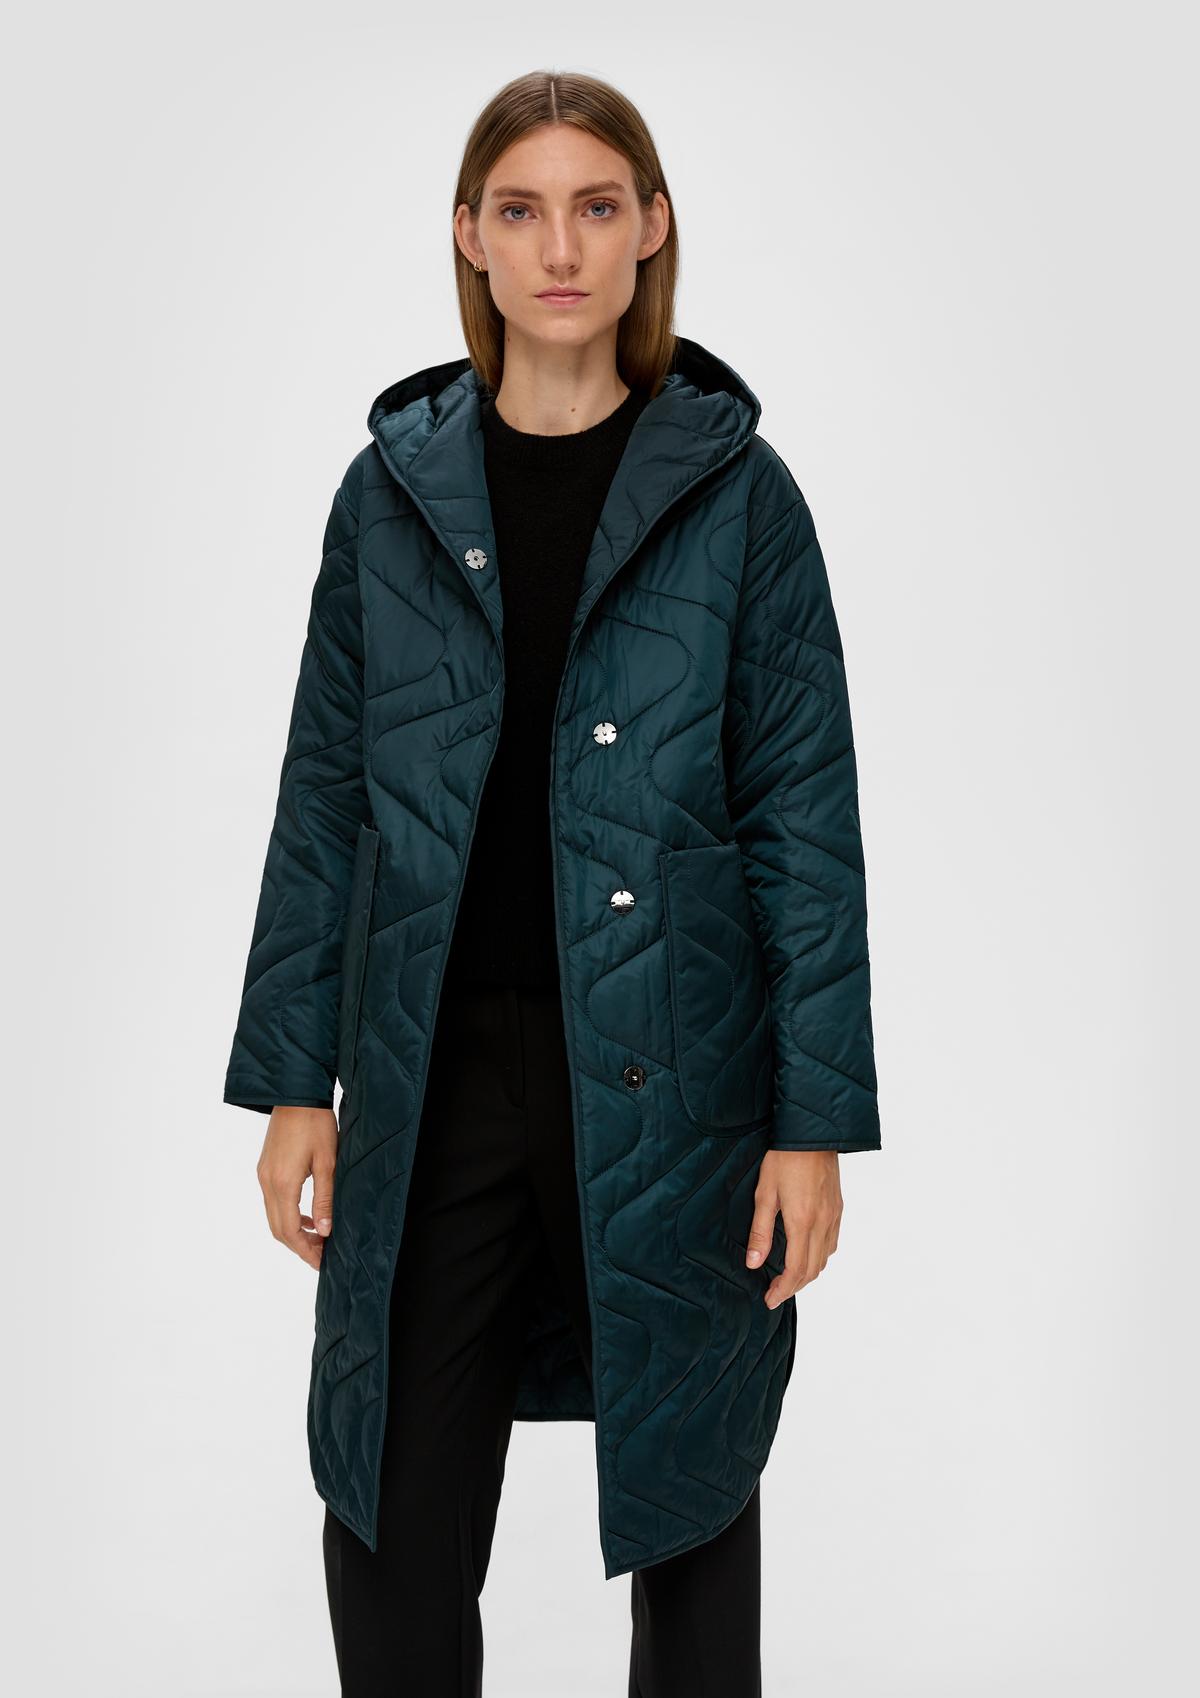 Jackets Coats & for Women